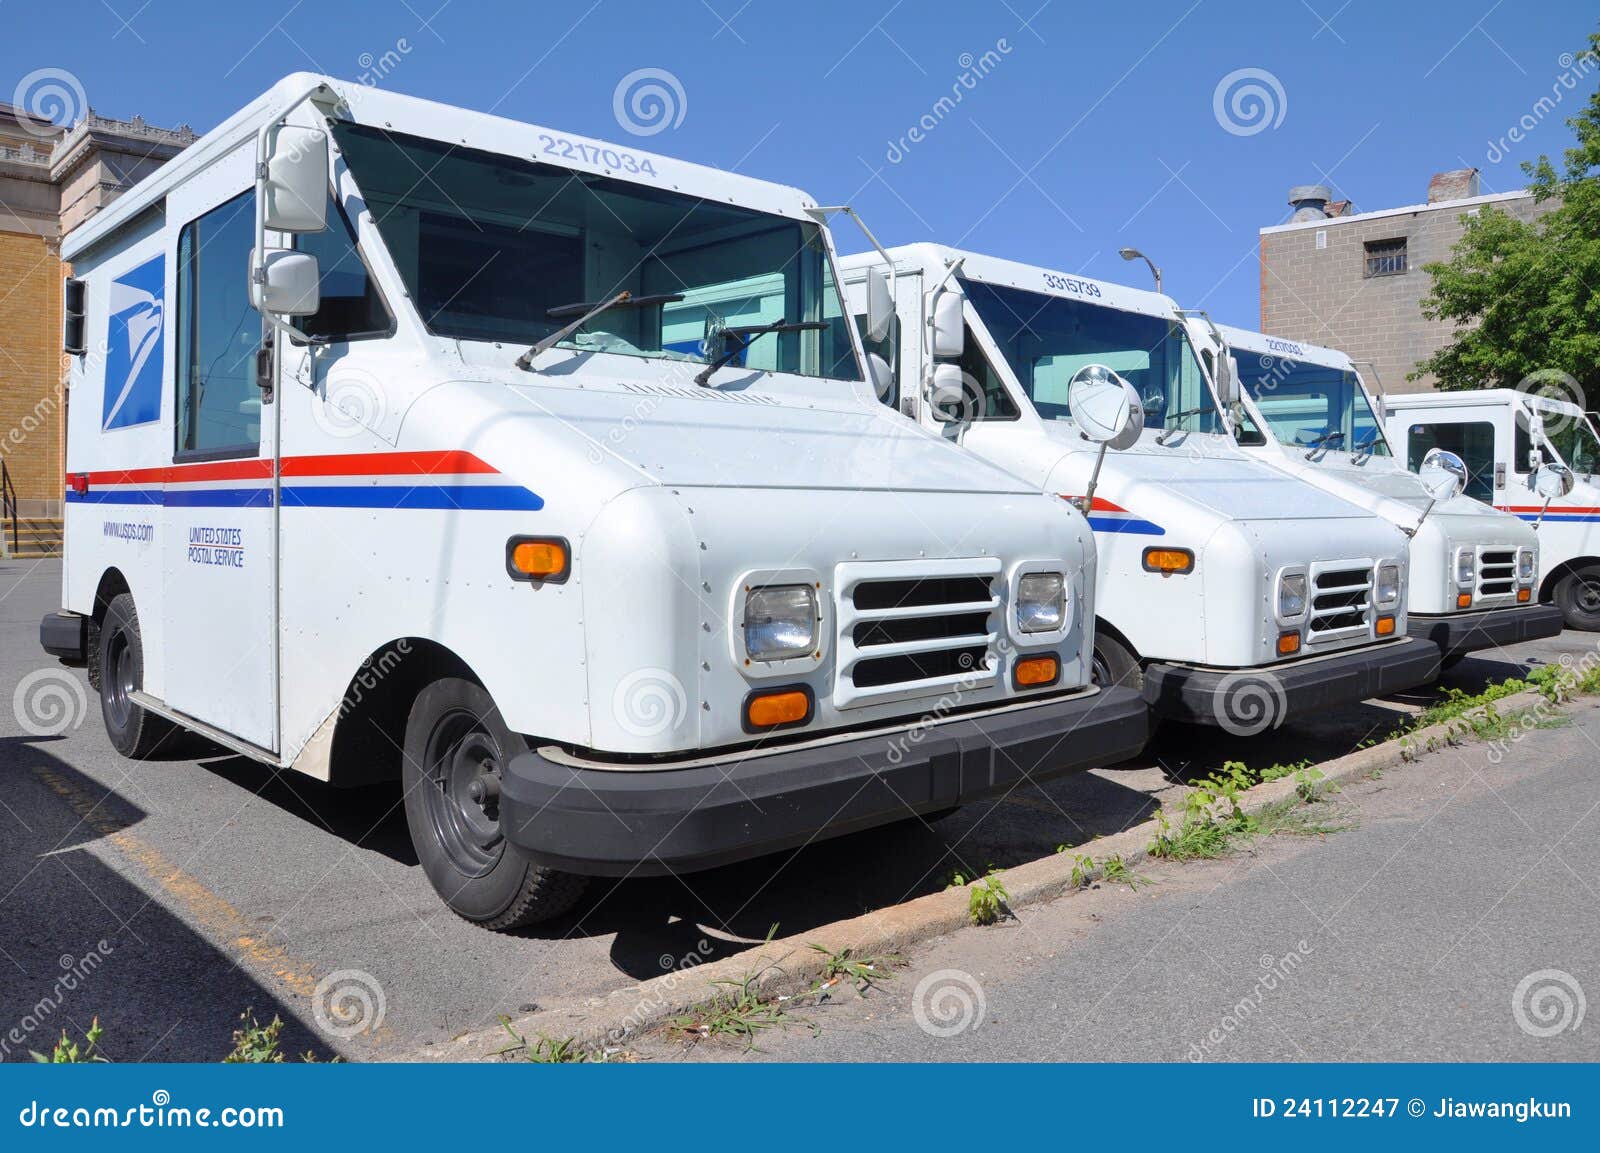 USPS Postal Vehicle Editorial Photography - Image: 24112247